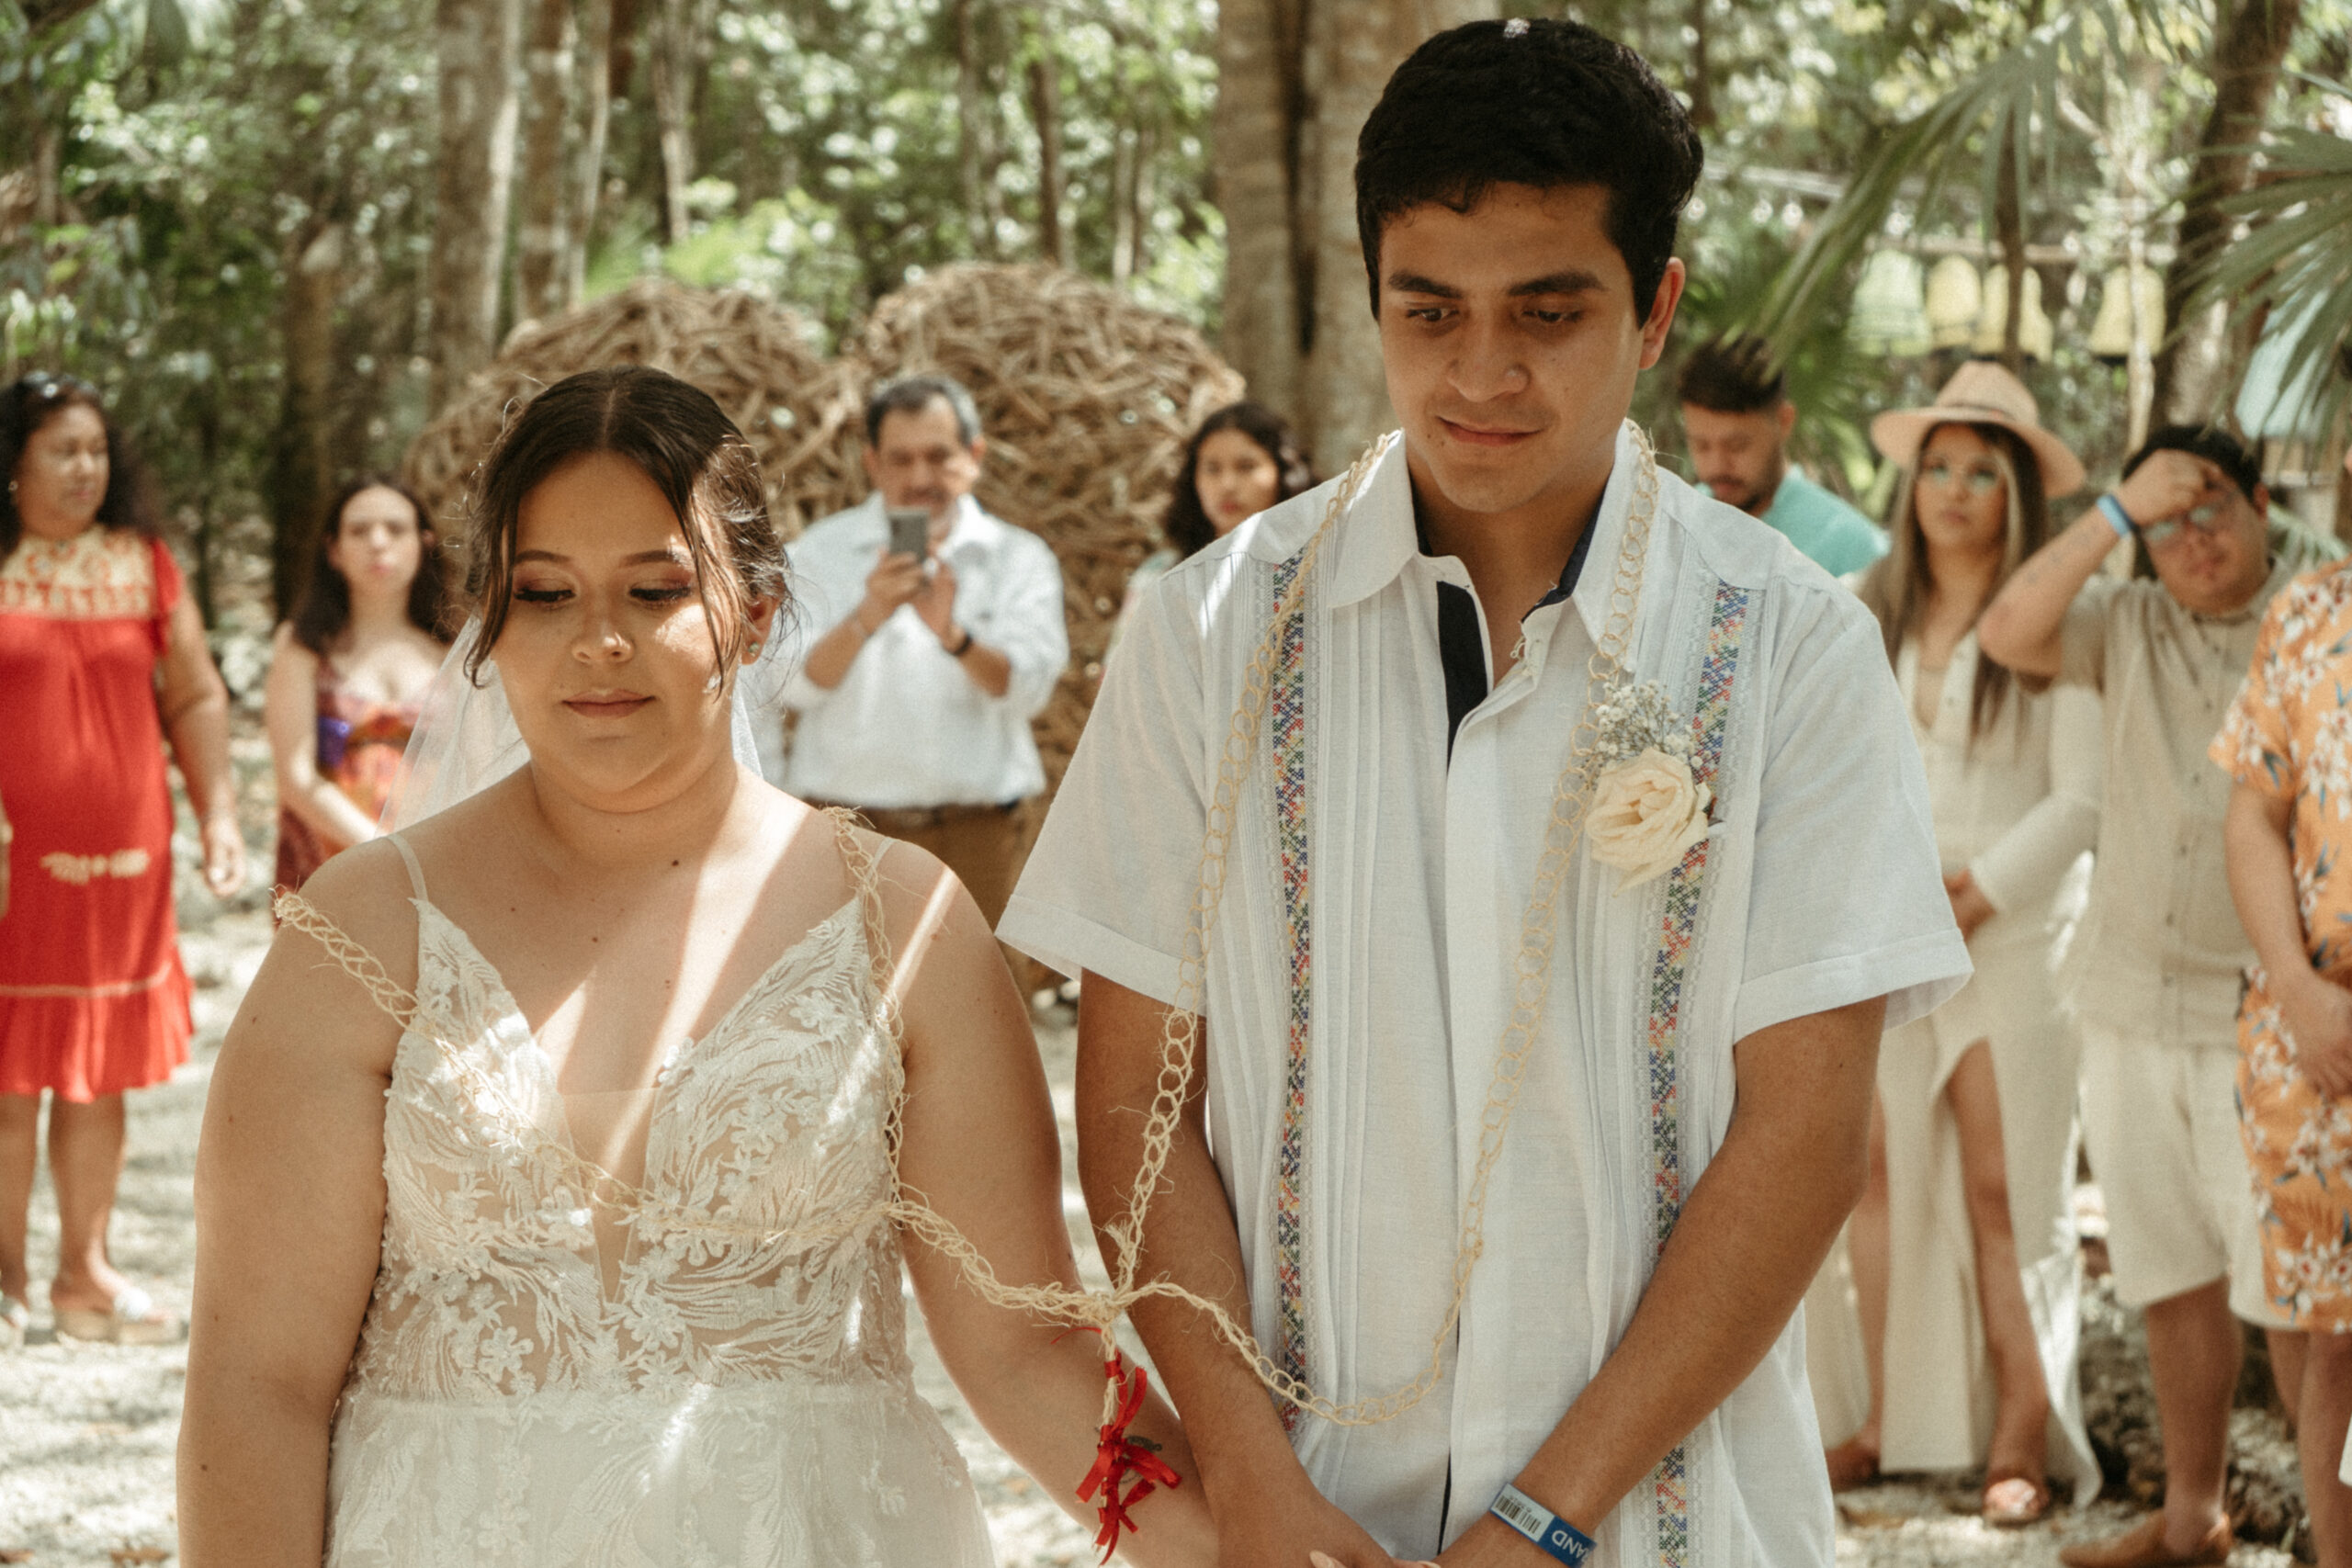 cenote elvira wedding photos9